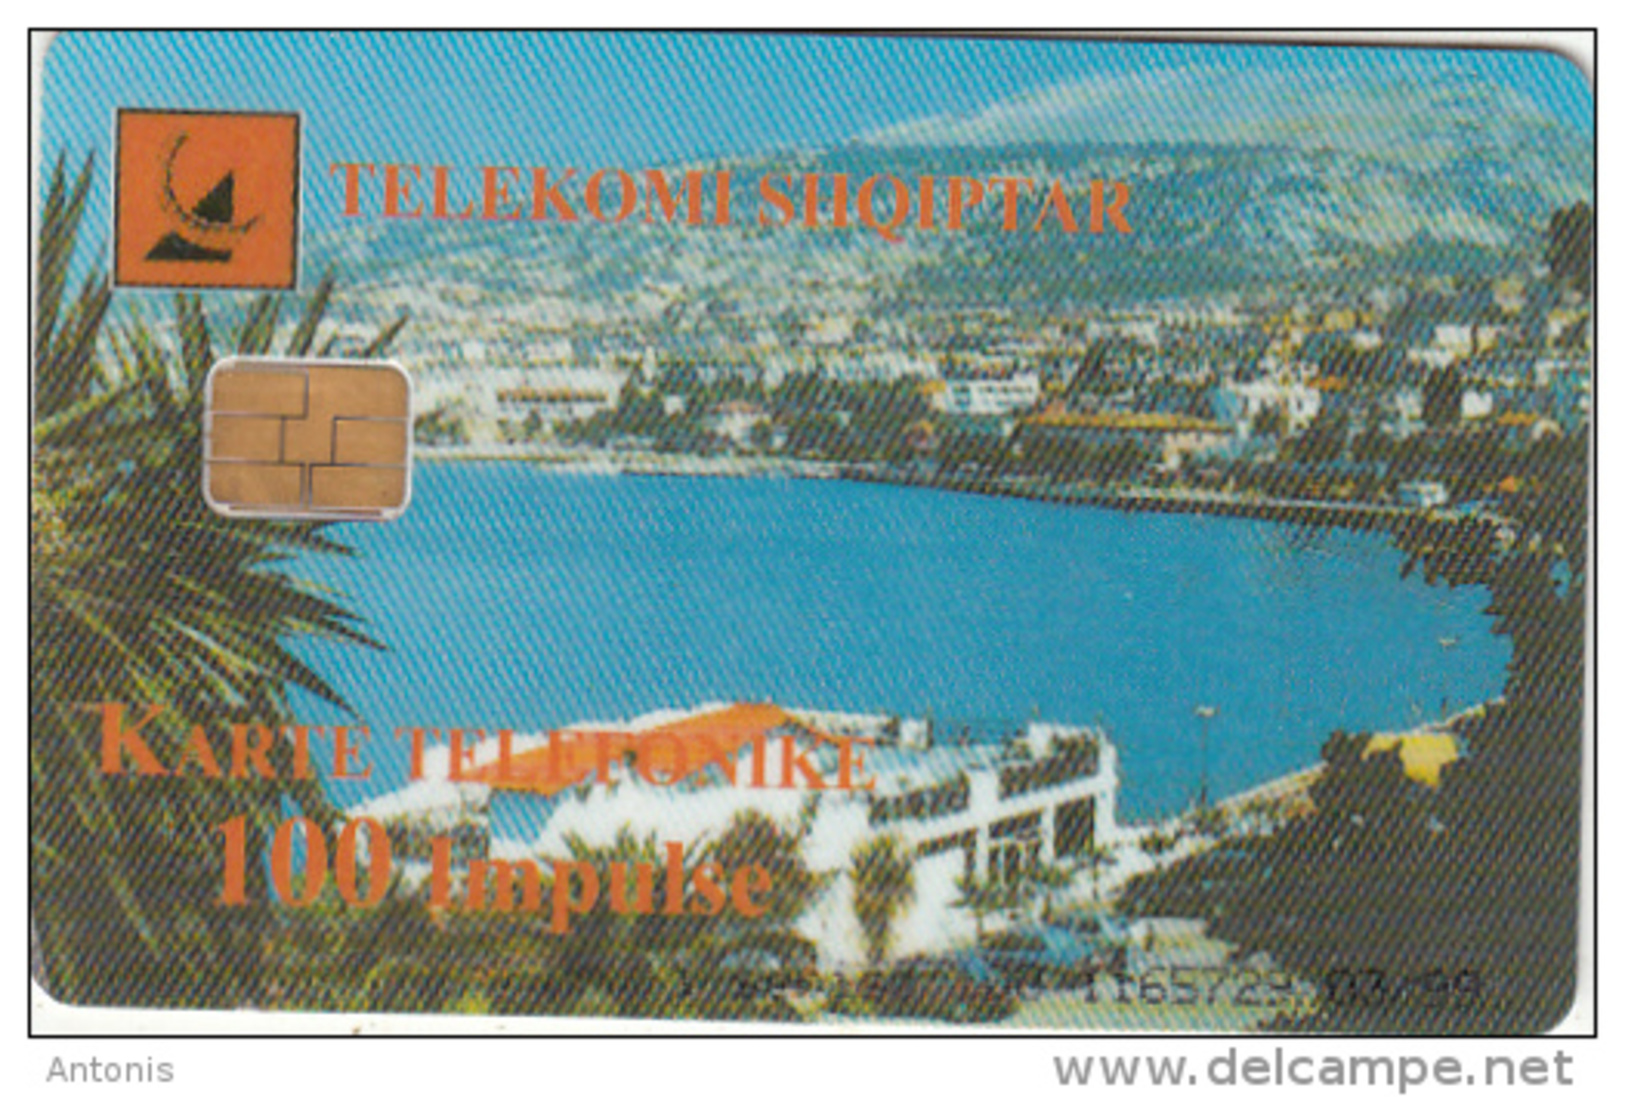 ALBANIA - City View, Albtelecom Telecard 100 Units(black Text), Tirage %90000, 03/99, Used - Albania